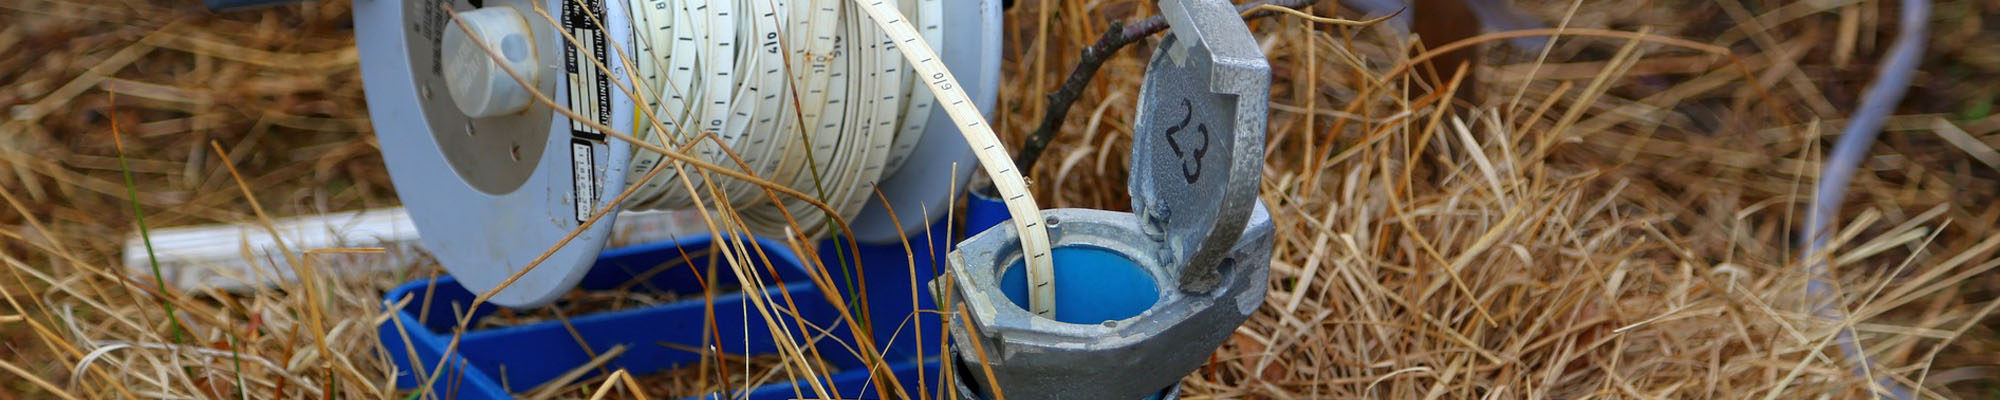 Gauge to measure water levels